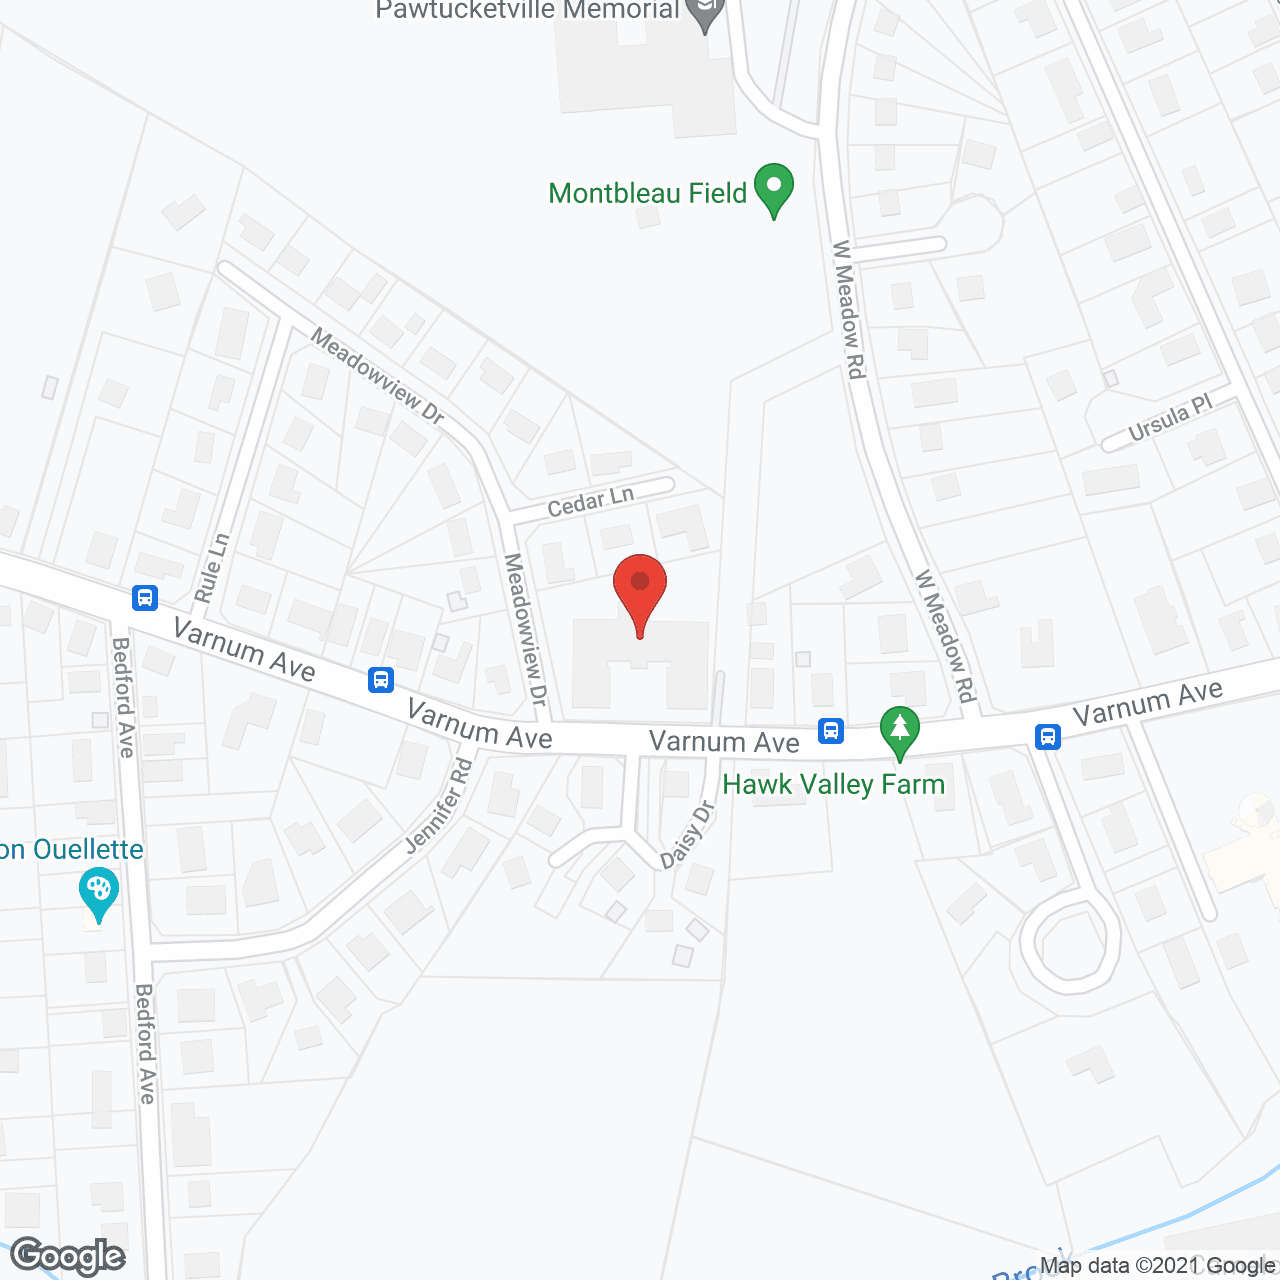 Glenwood Care and Rehabilitation Center in google map